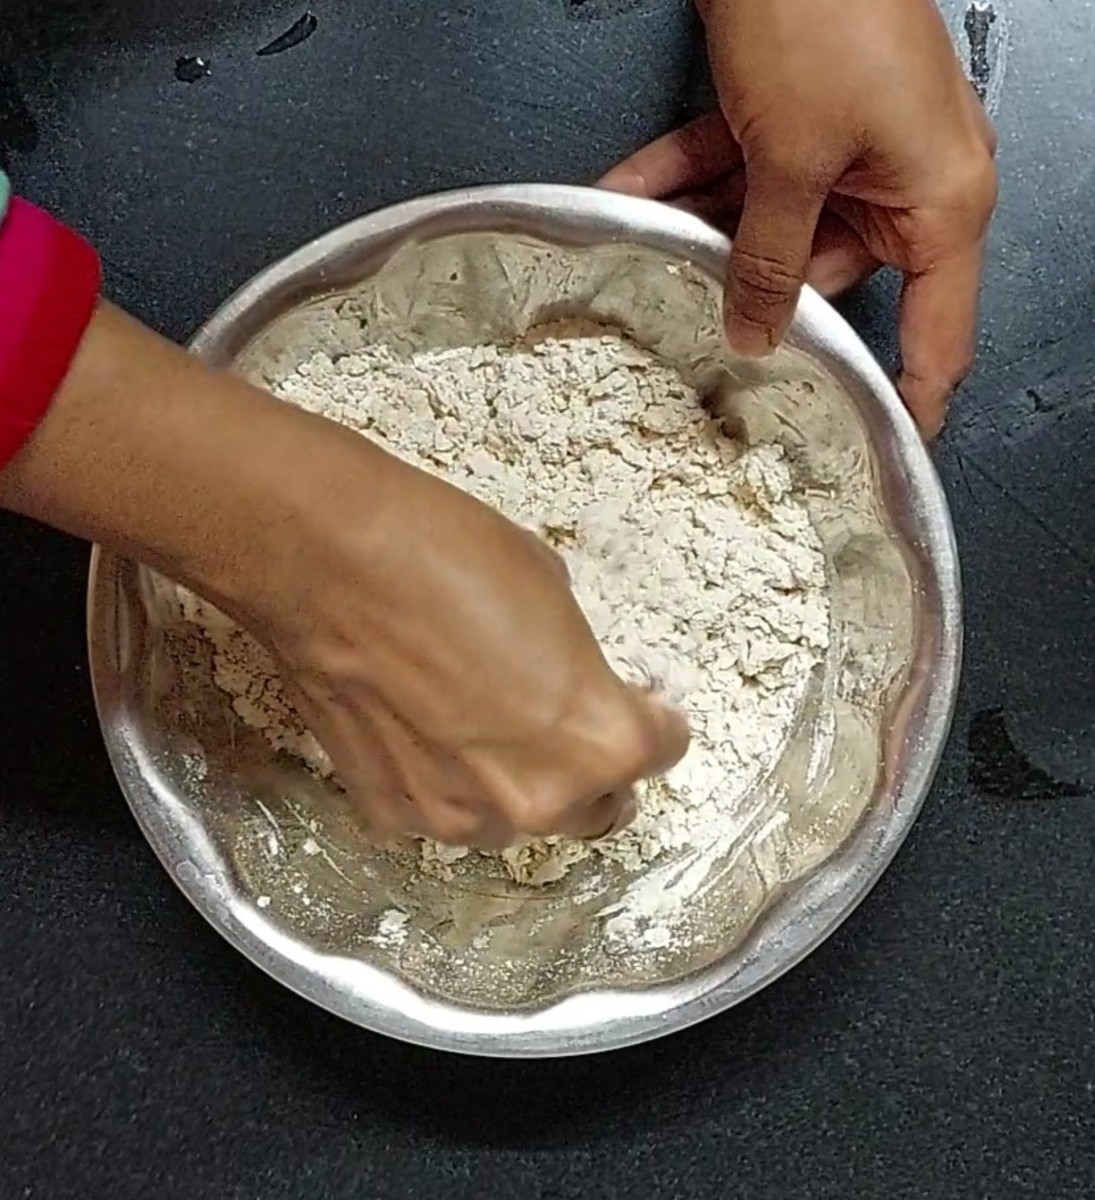 In a wide vessel, add 2 cups of wheat flour add salt. Mix well.